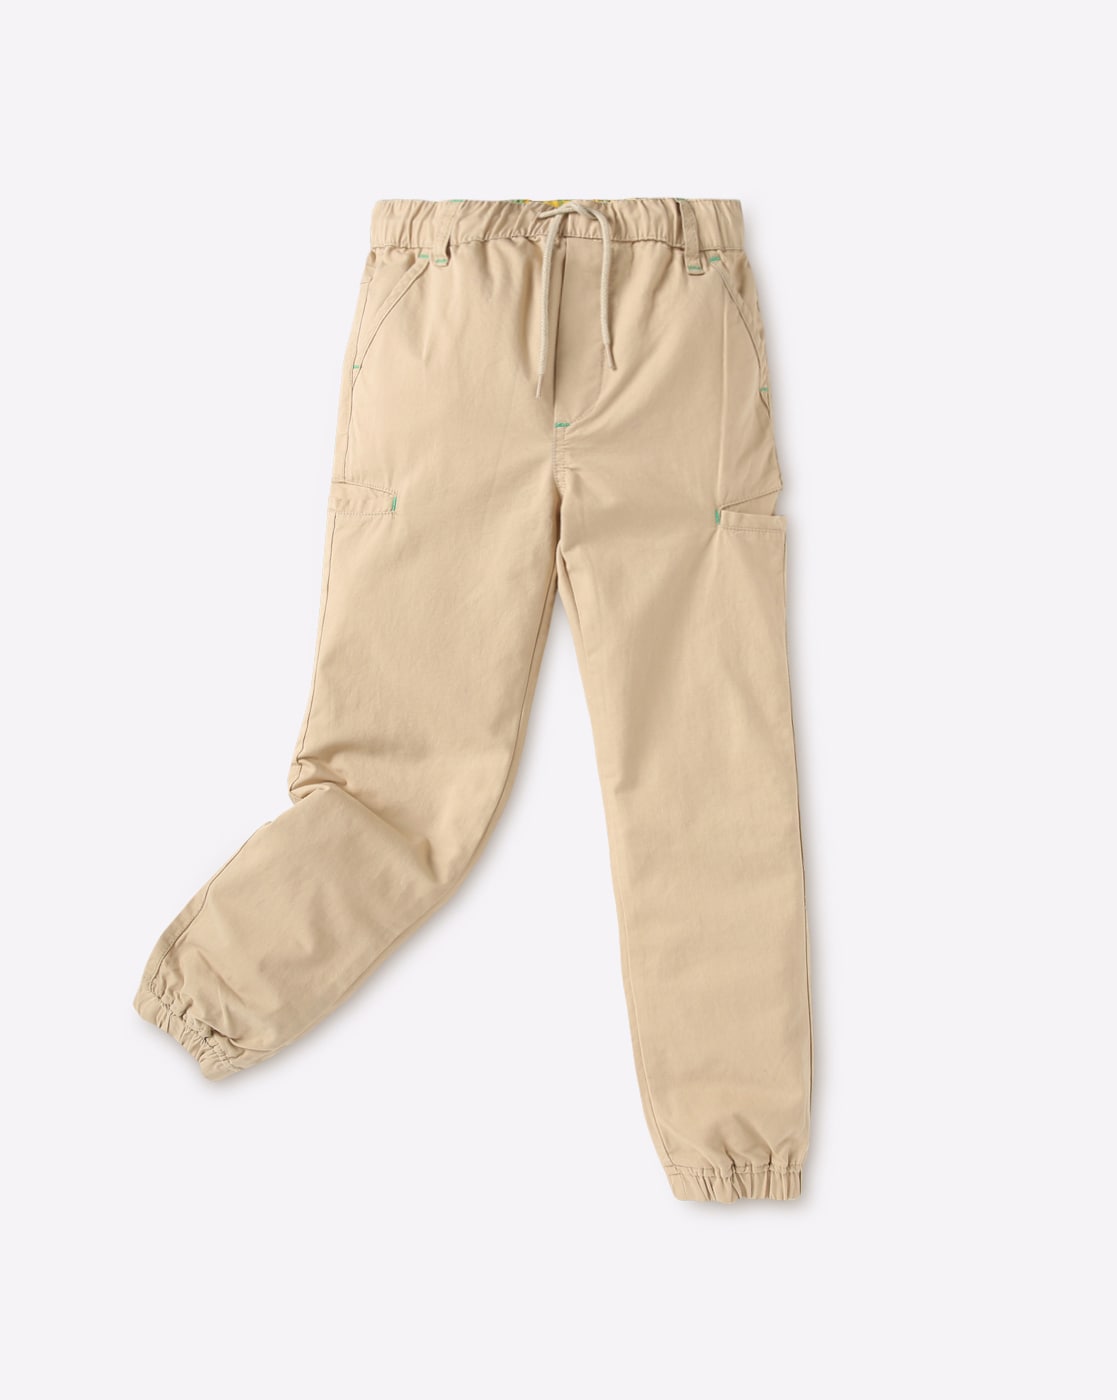 Cheap Men Hot Cotton Pants Elastic Trousers Linen Casual NEW Fashion M3XL   Joom